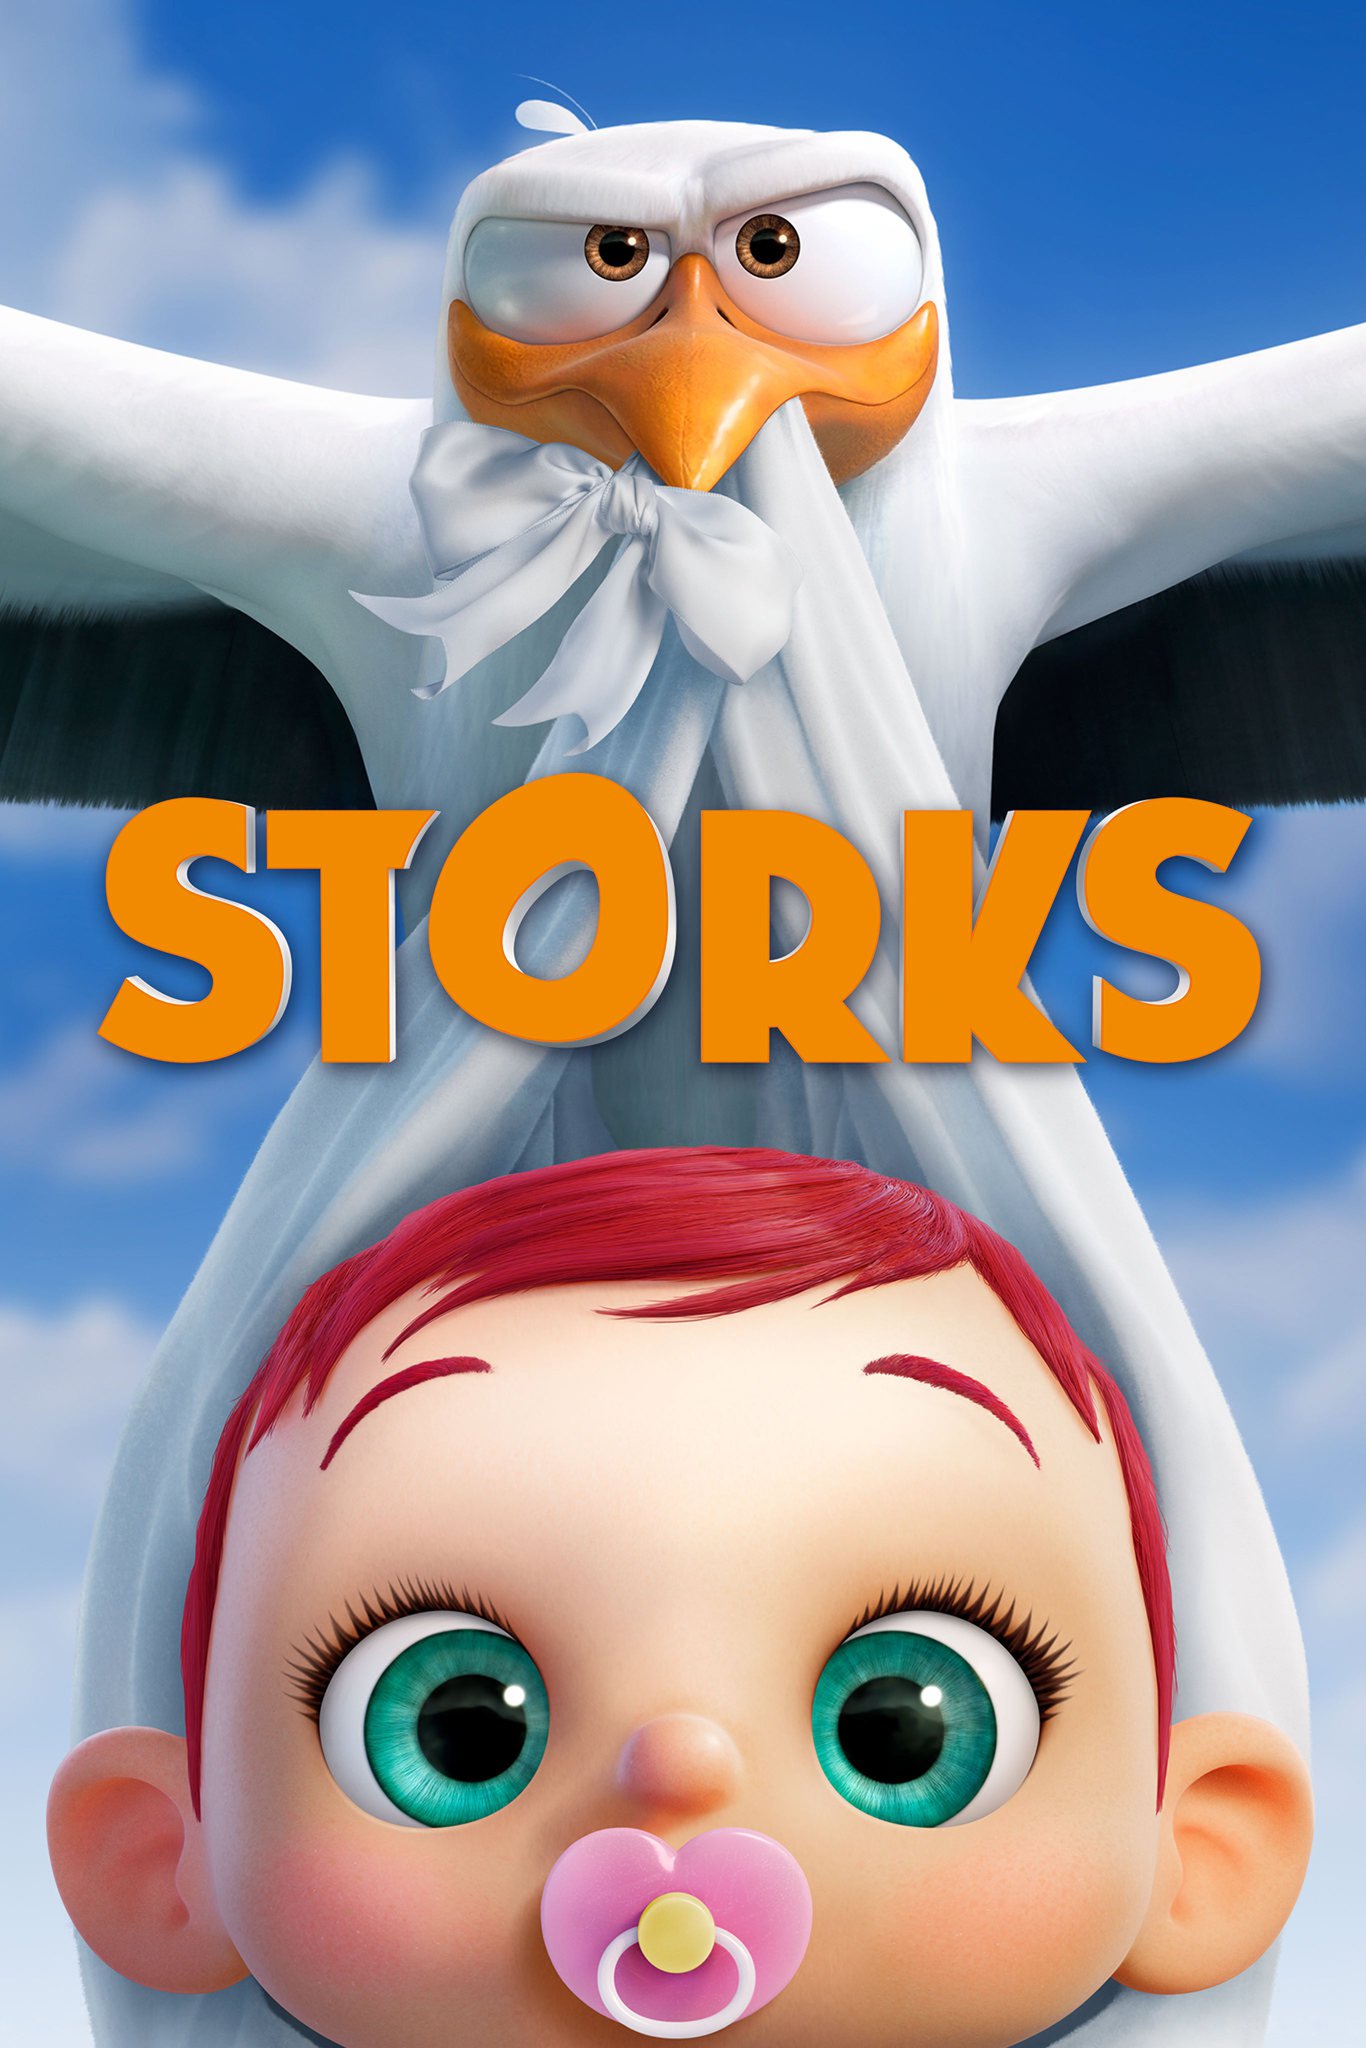 Storks full movie free download 300mb